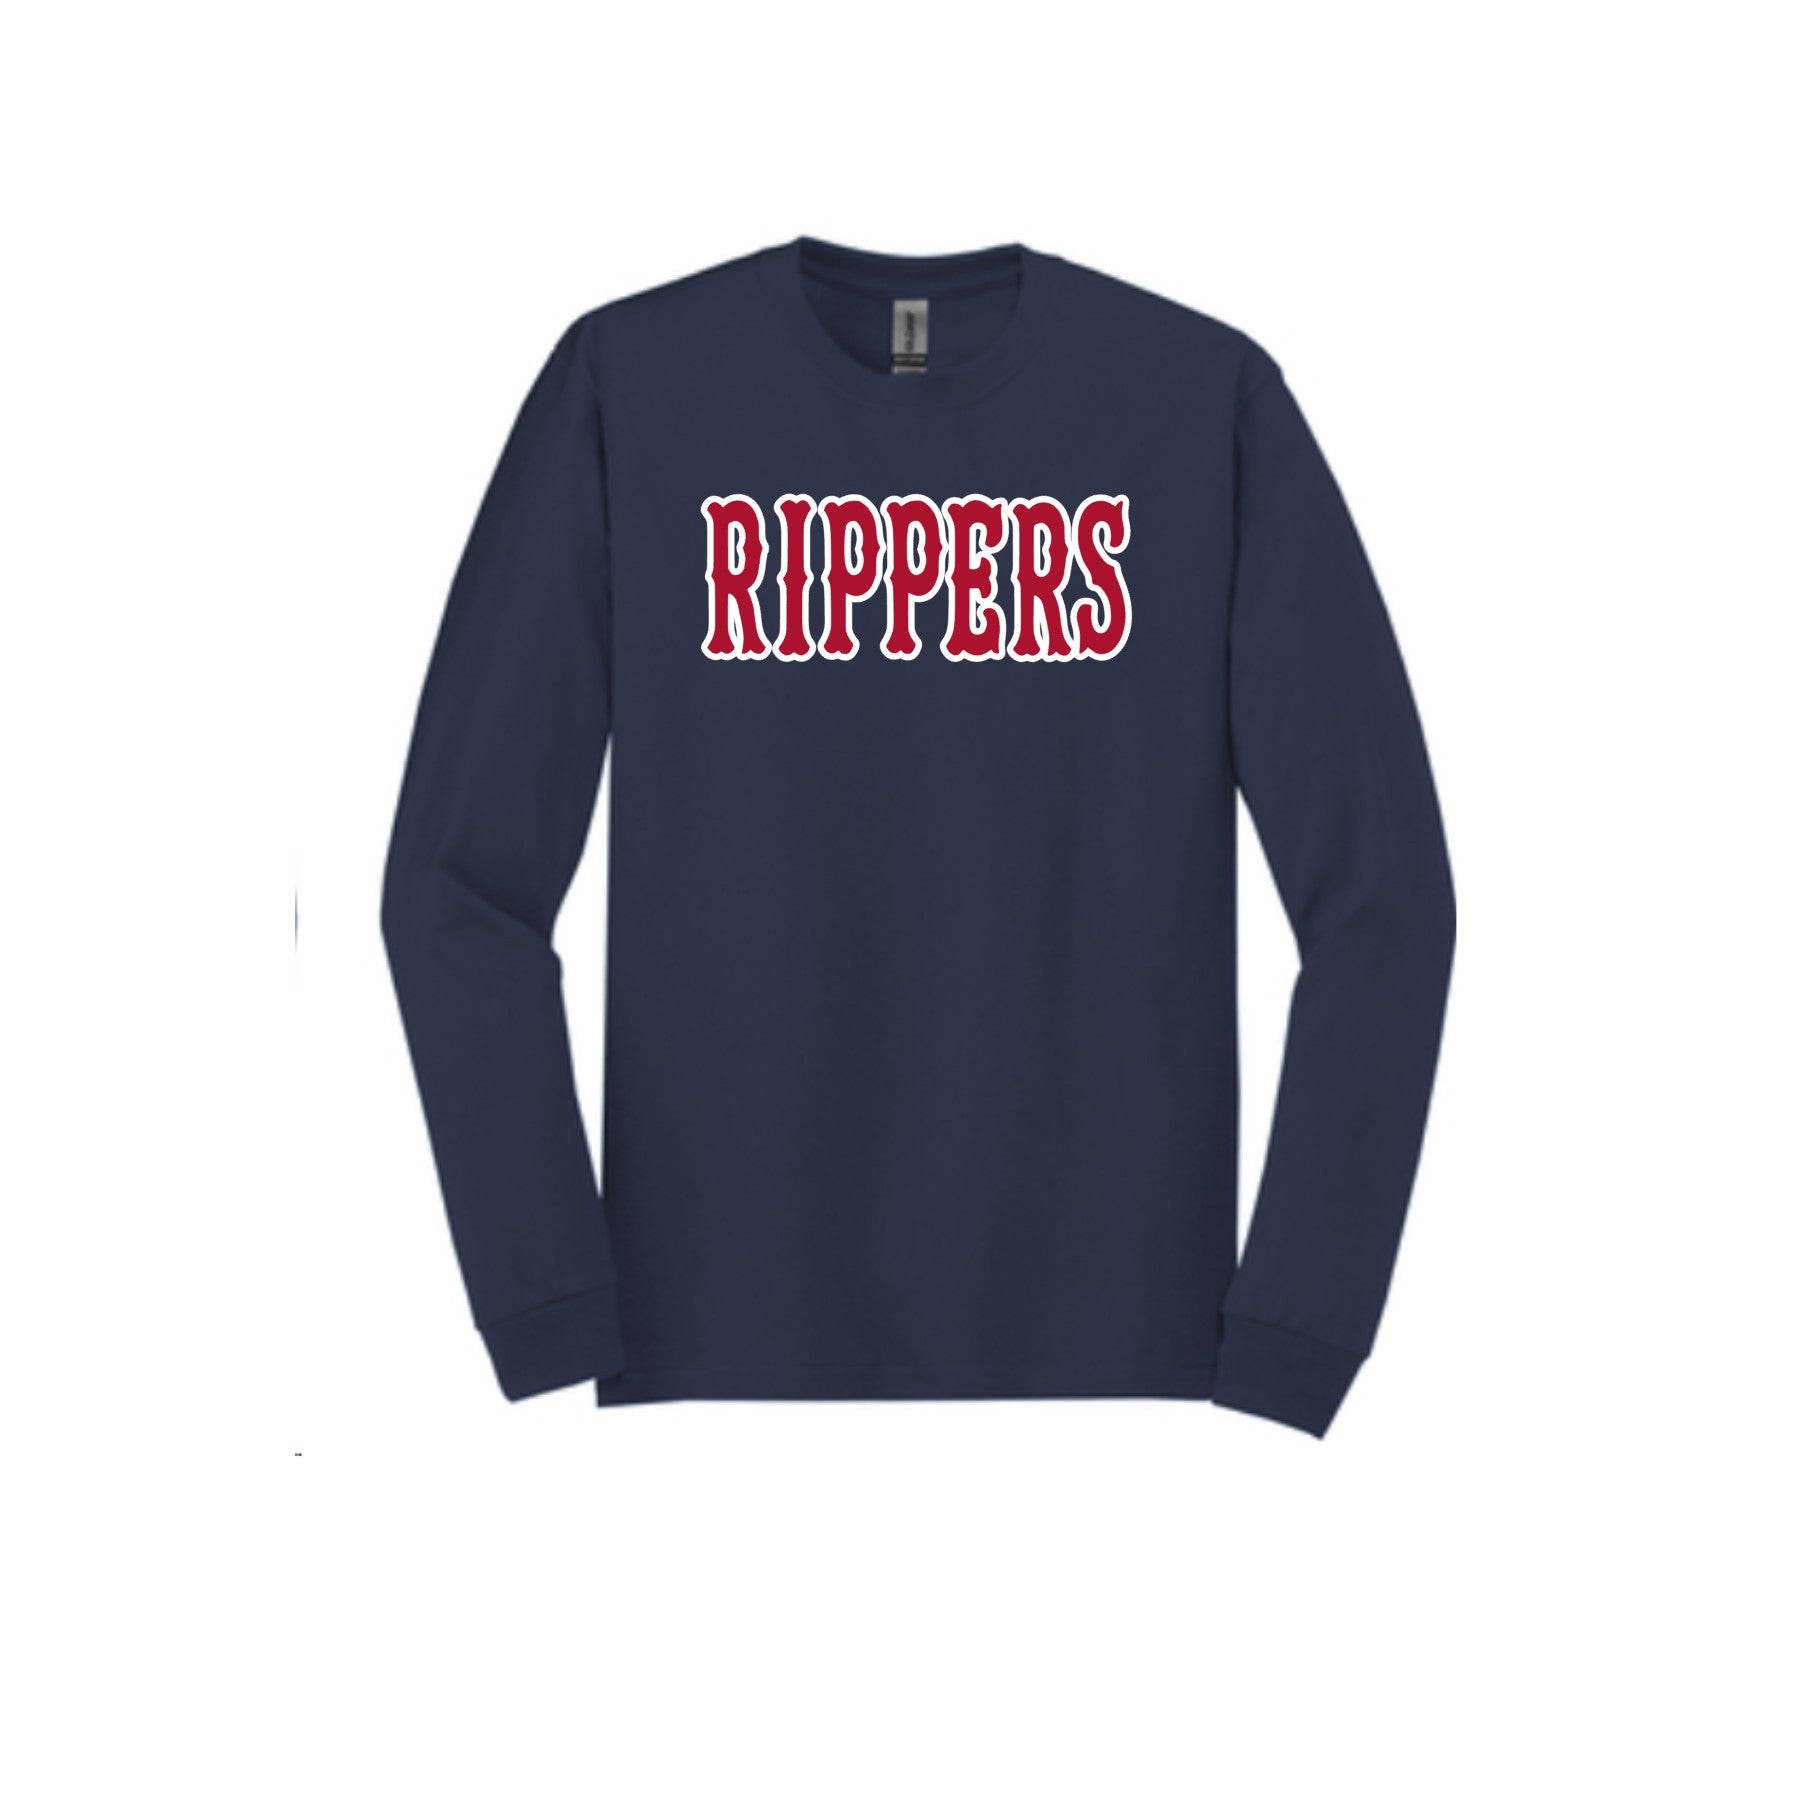 Rippers Baseball Long Sleeve Gildan Tee - Navy